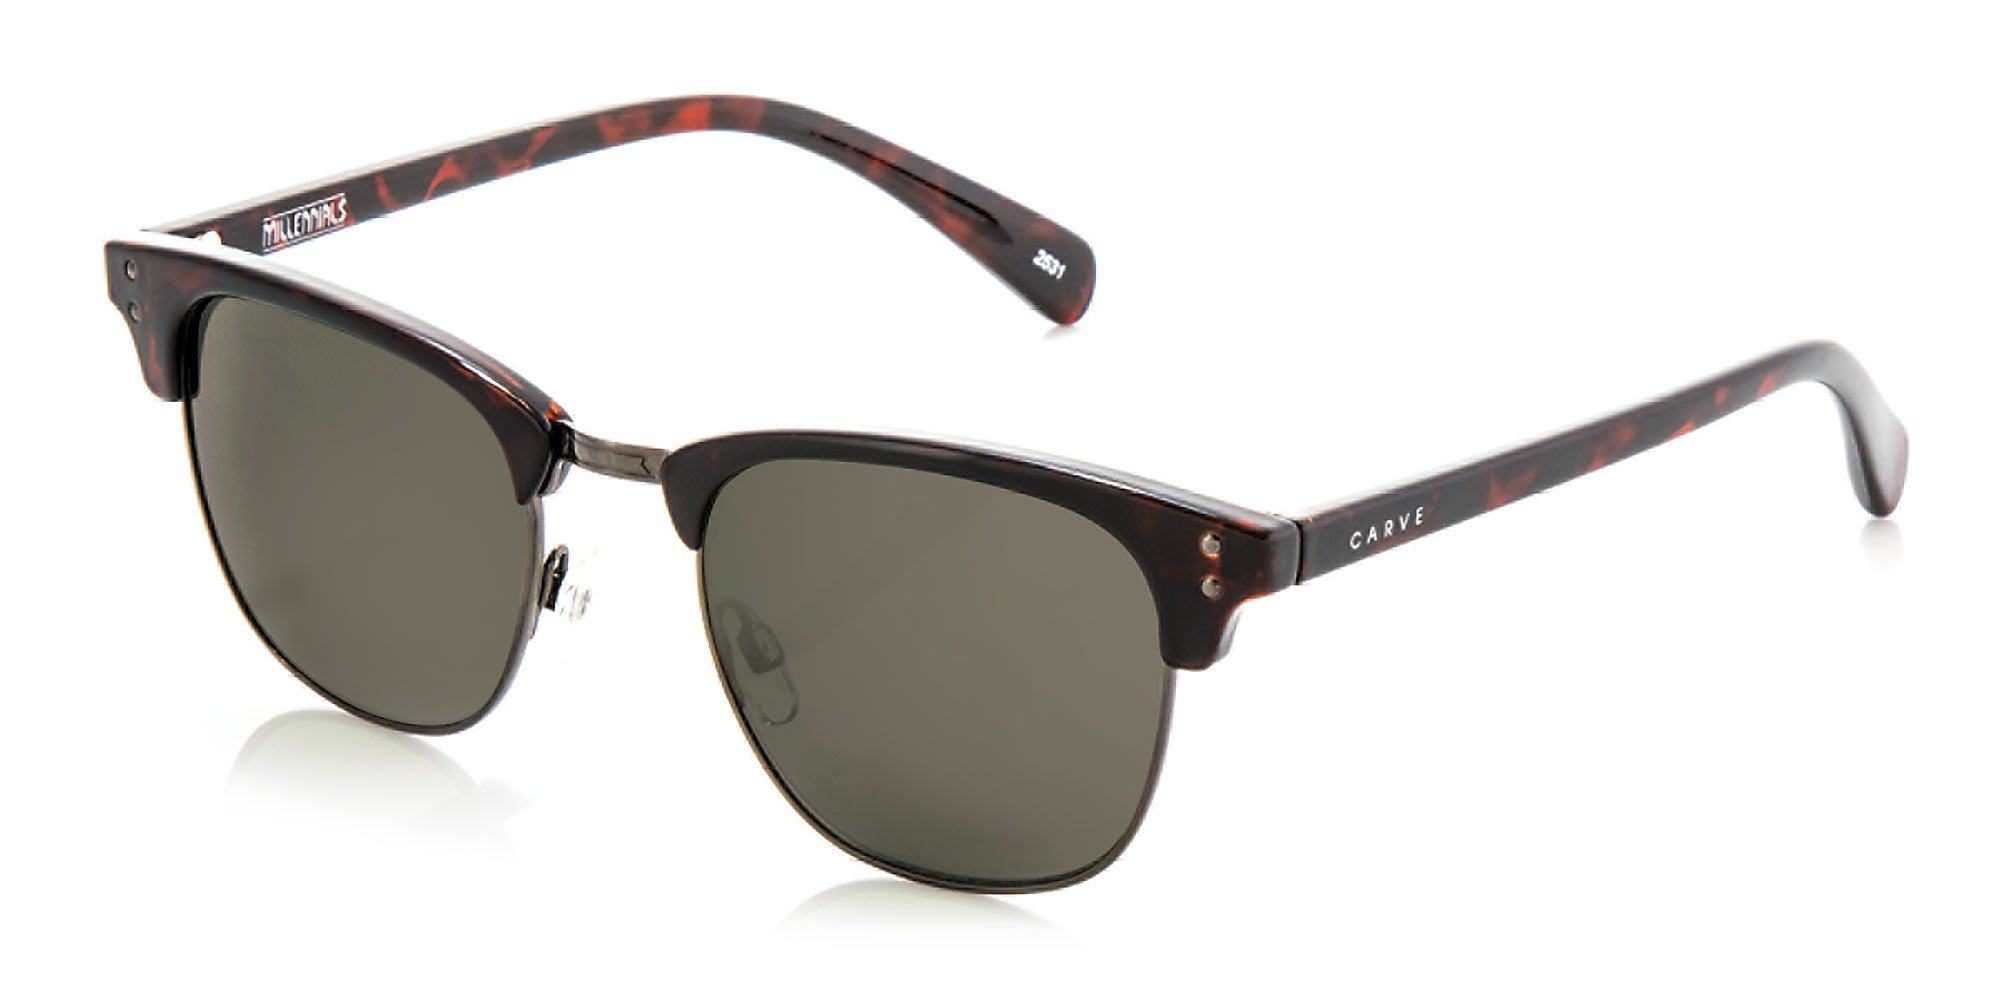 Carve Millennials Wire Frame Sunglasses